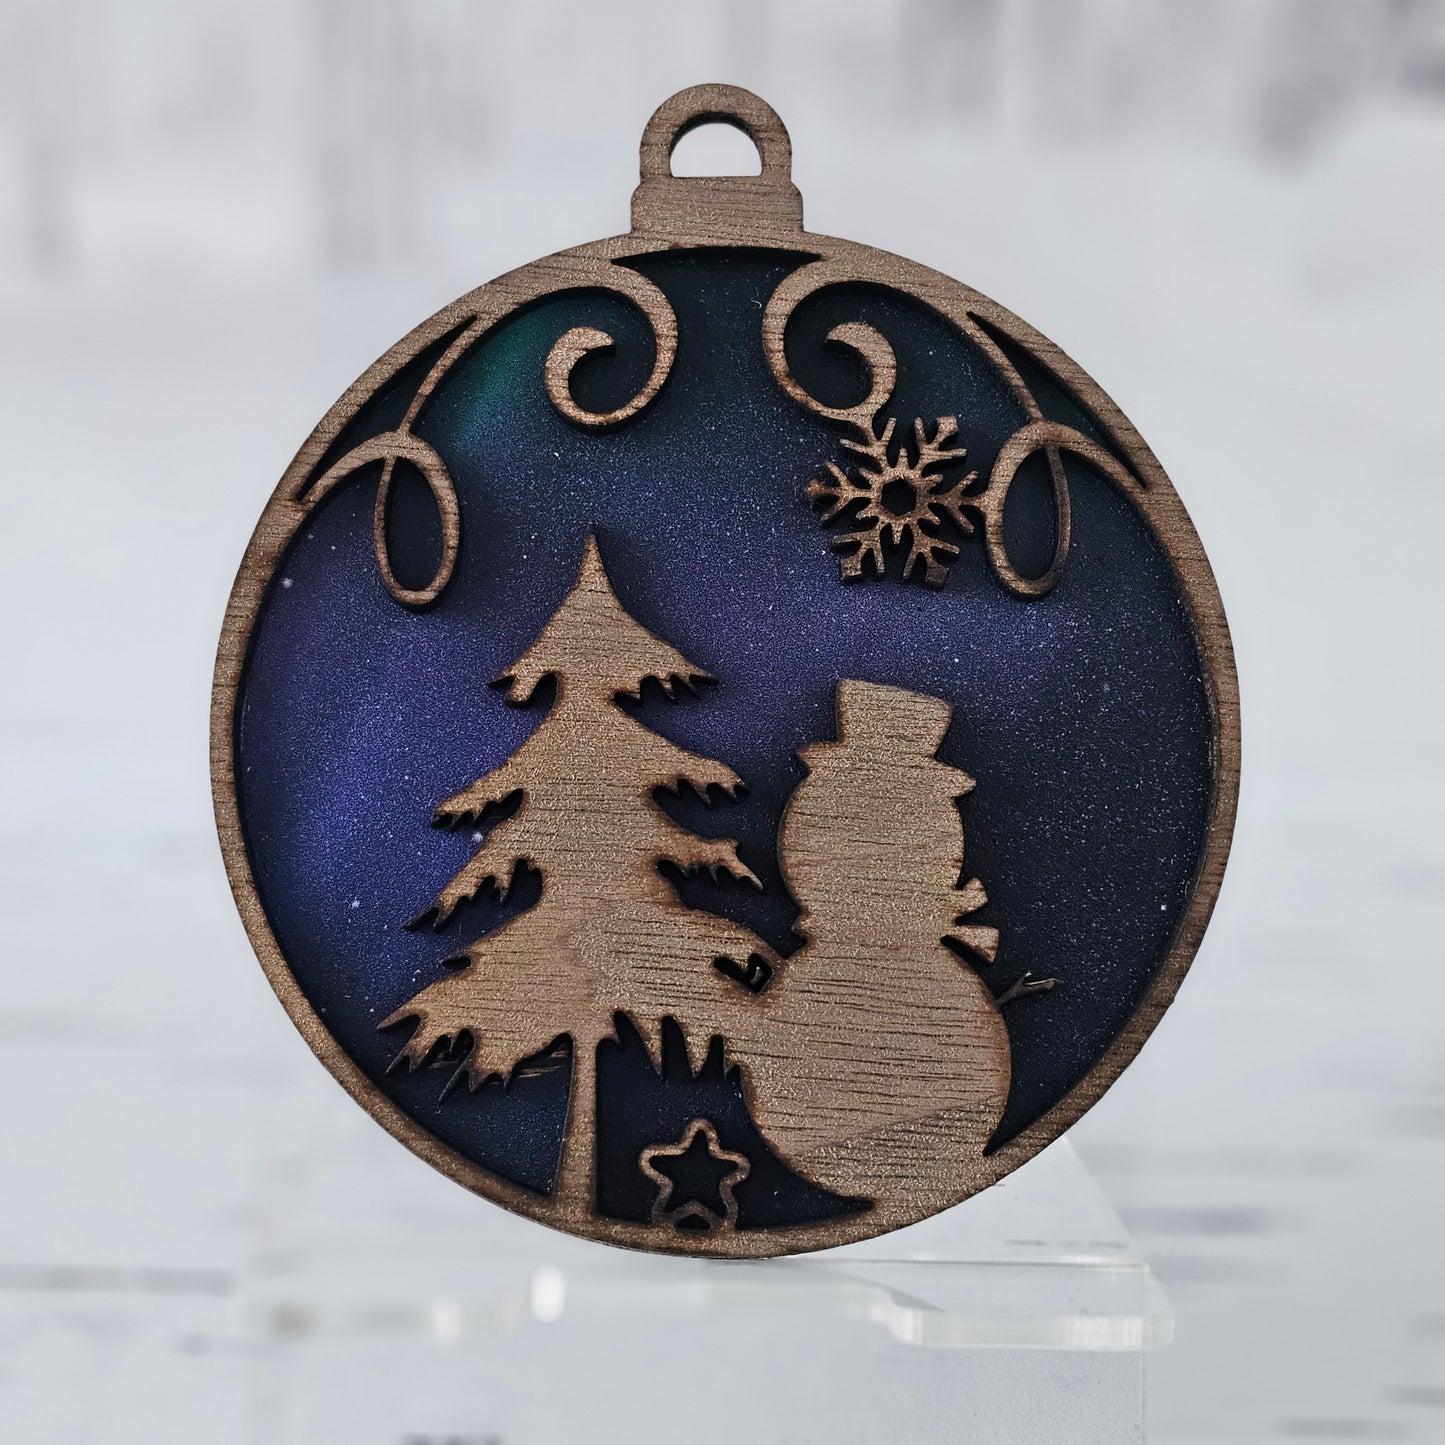 Snowman Ornament - Opaque Northern Lights